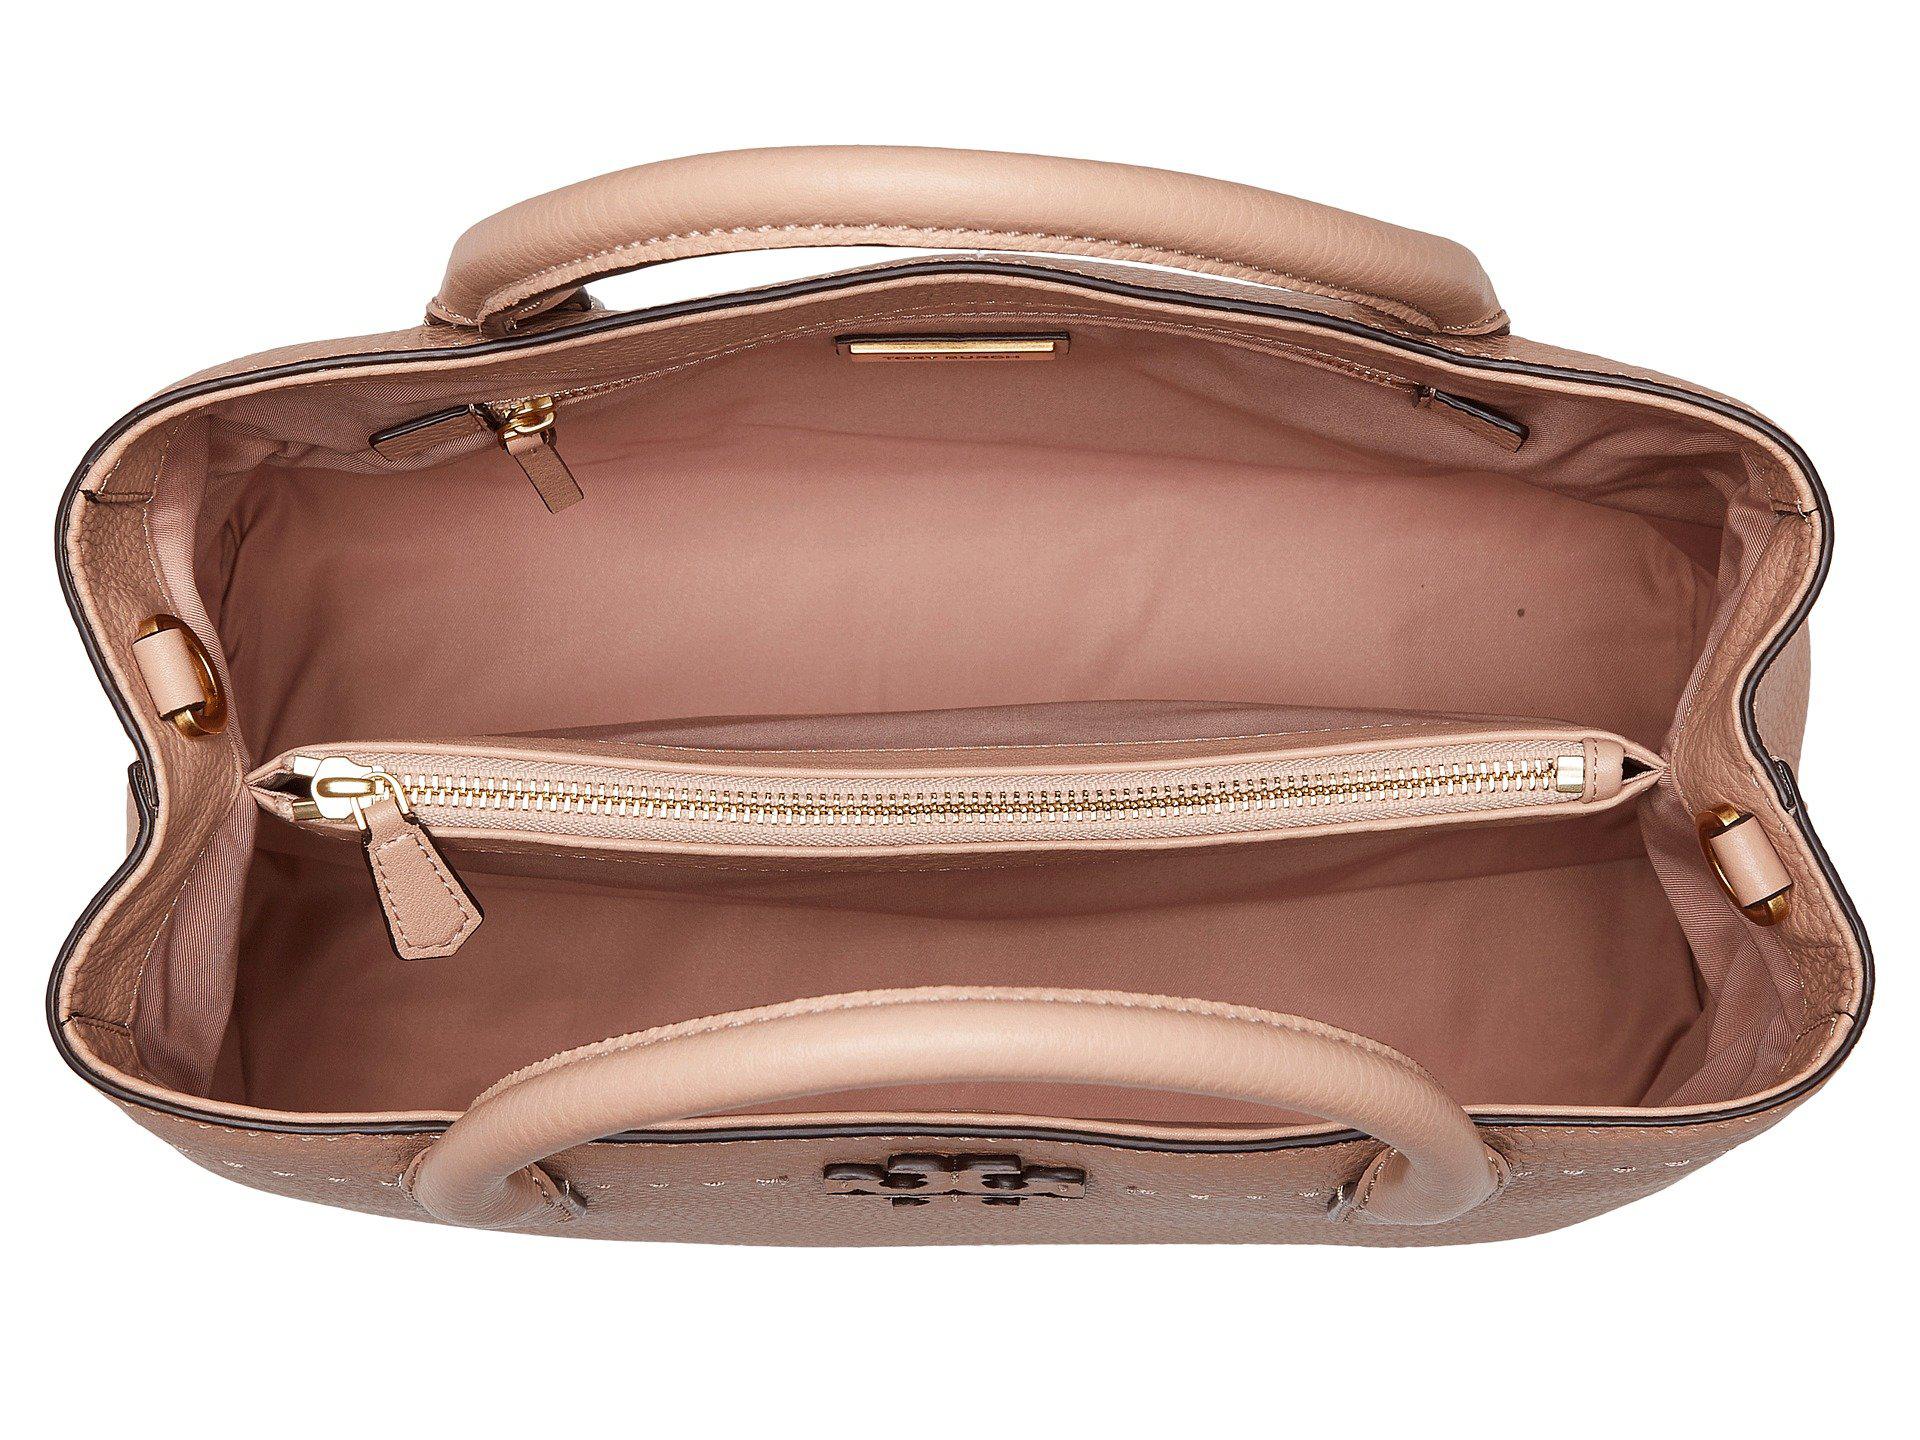 Triple Compartment Handbags | The Art of Mike Mignola